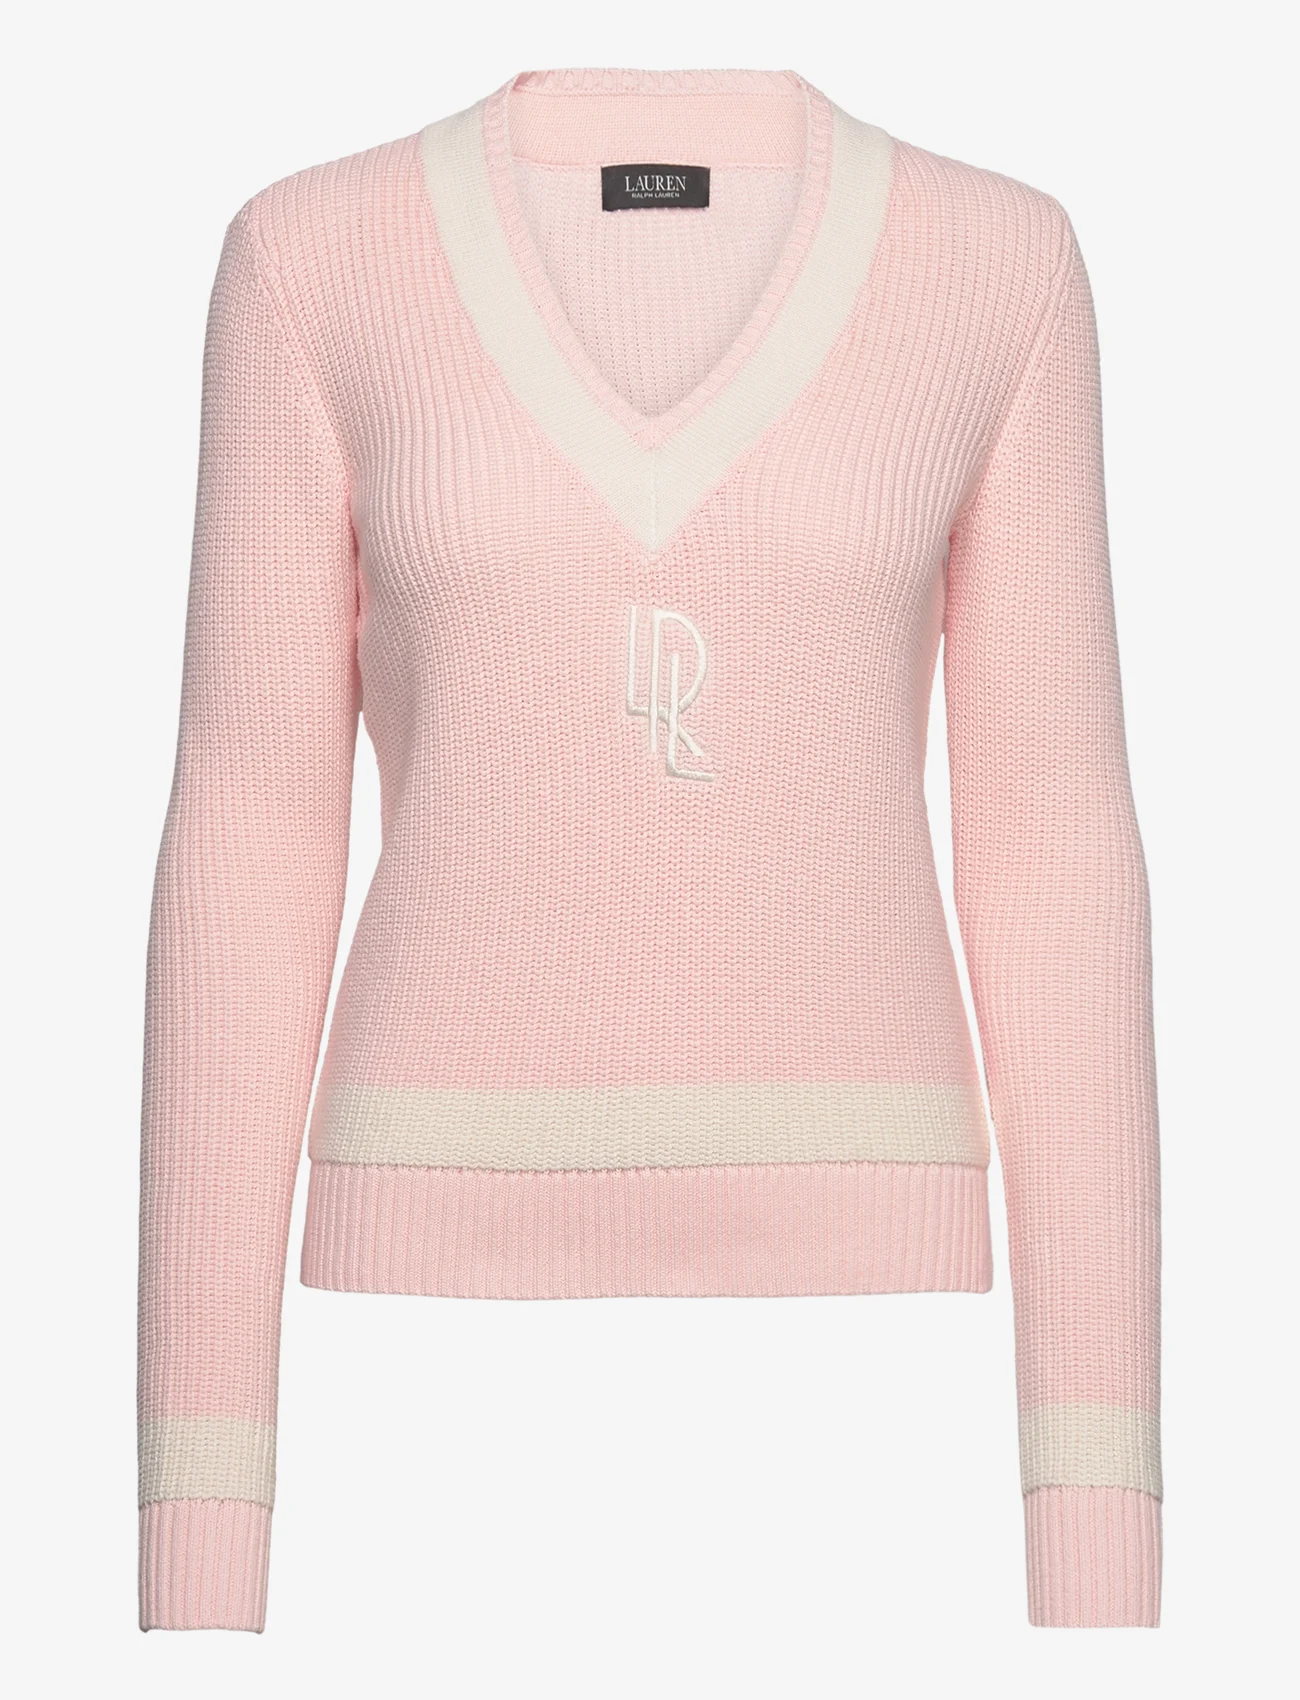 Lauren Ralph Lauren - Cable-Knit Cotton Cricket Sweater - swetry - pink opal/mascarp - 0